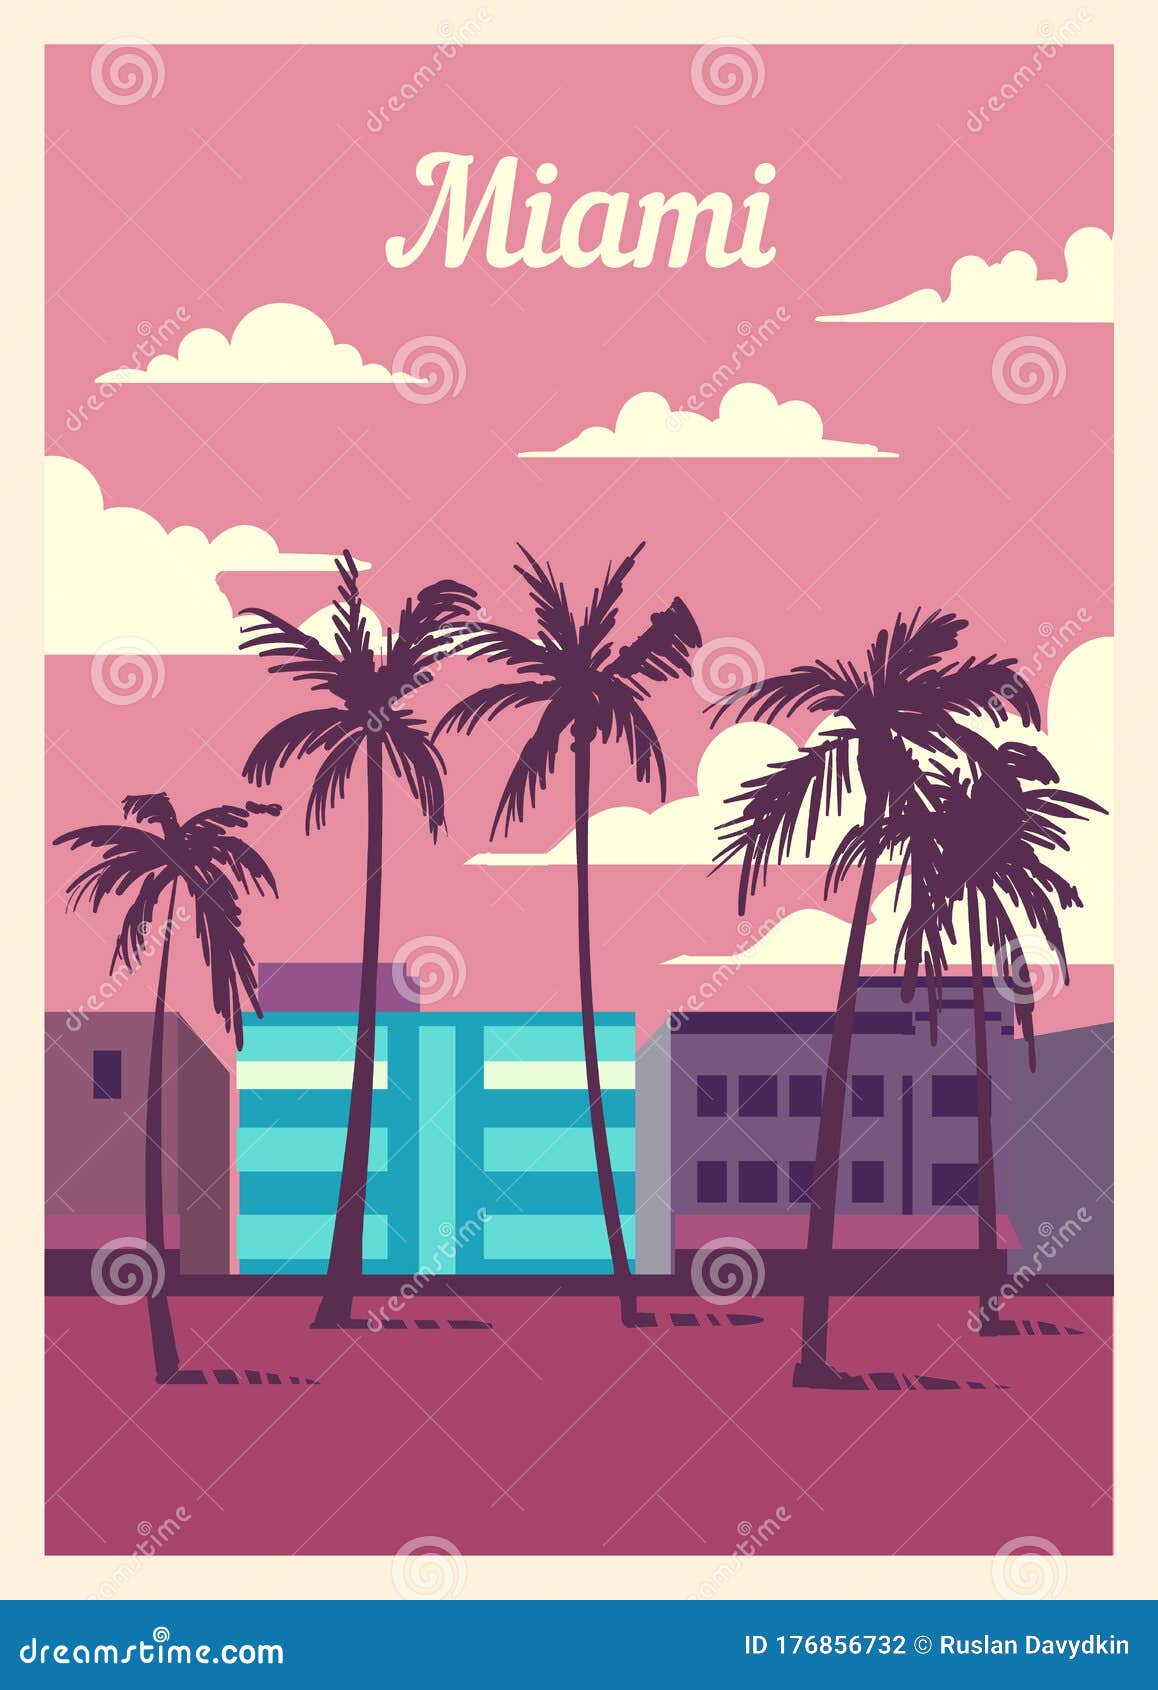 Miami City Skyline. Miami Vintage Stock Illustration - Illustration of buildings, cityscape: 176856732